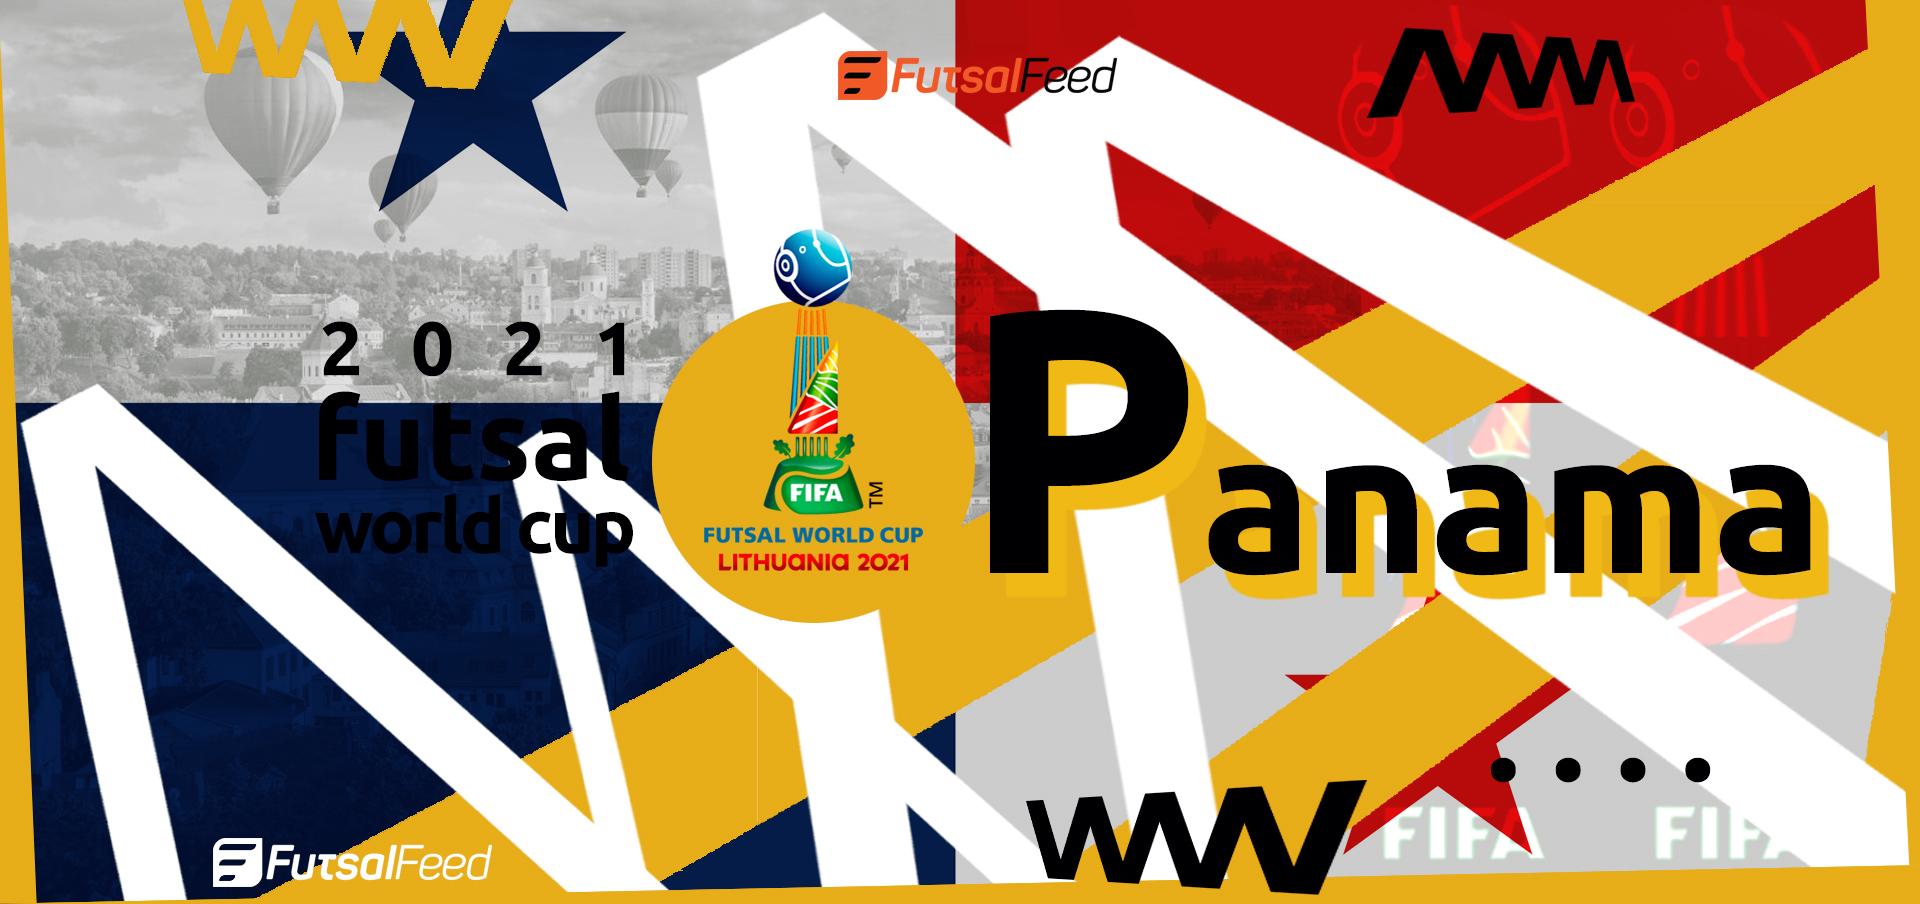 Futsalfeed Group D Panama Fifa Futsal World Cup